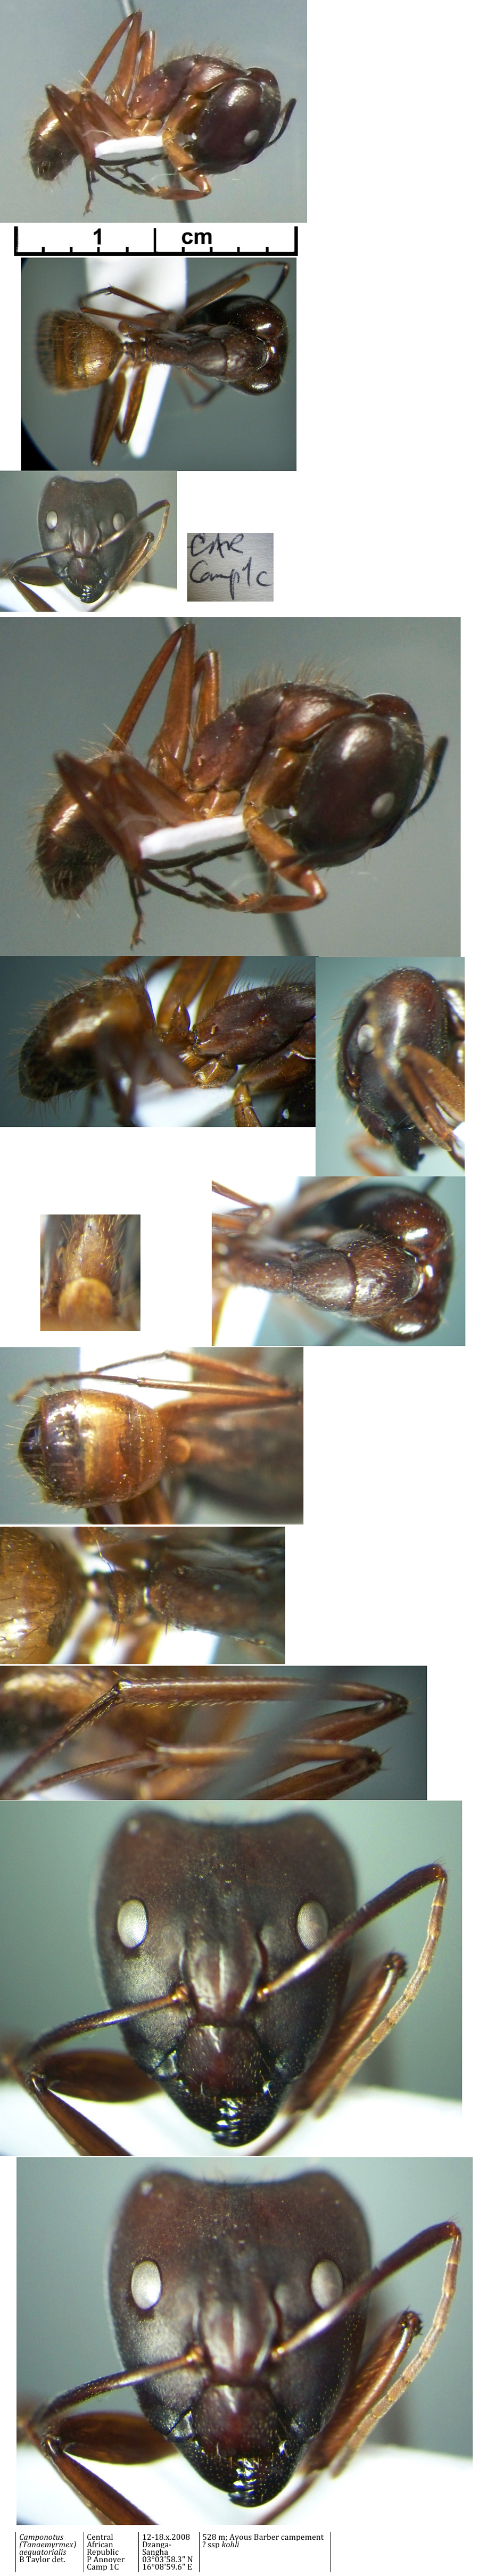 {Camponotus aequatorialis kohli major}